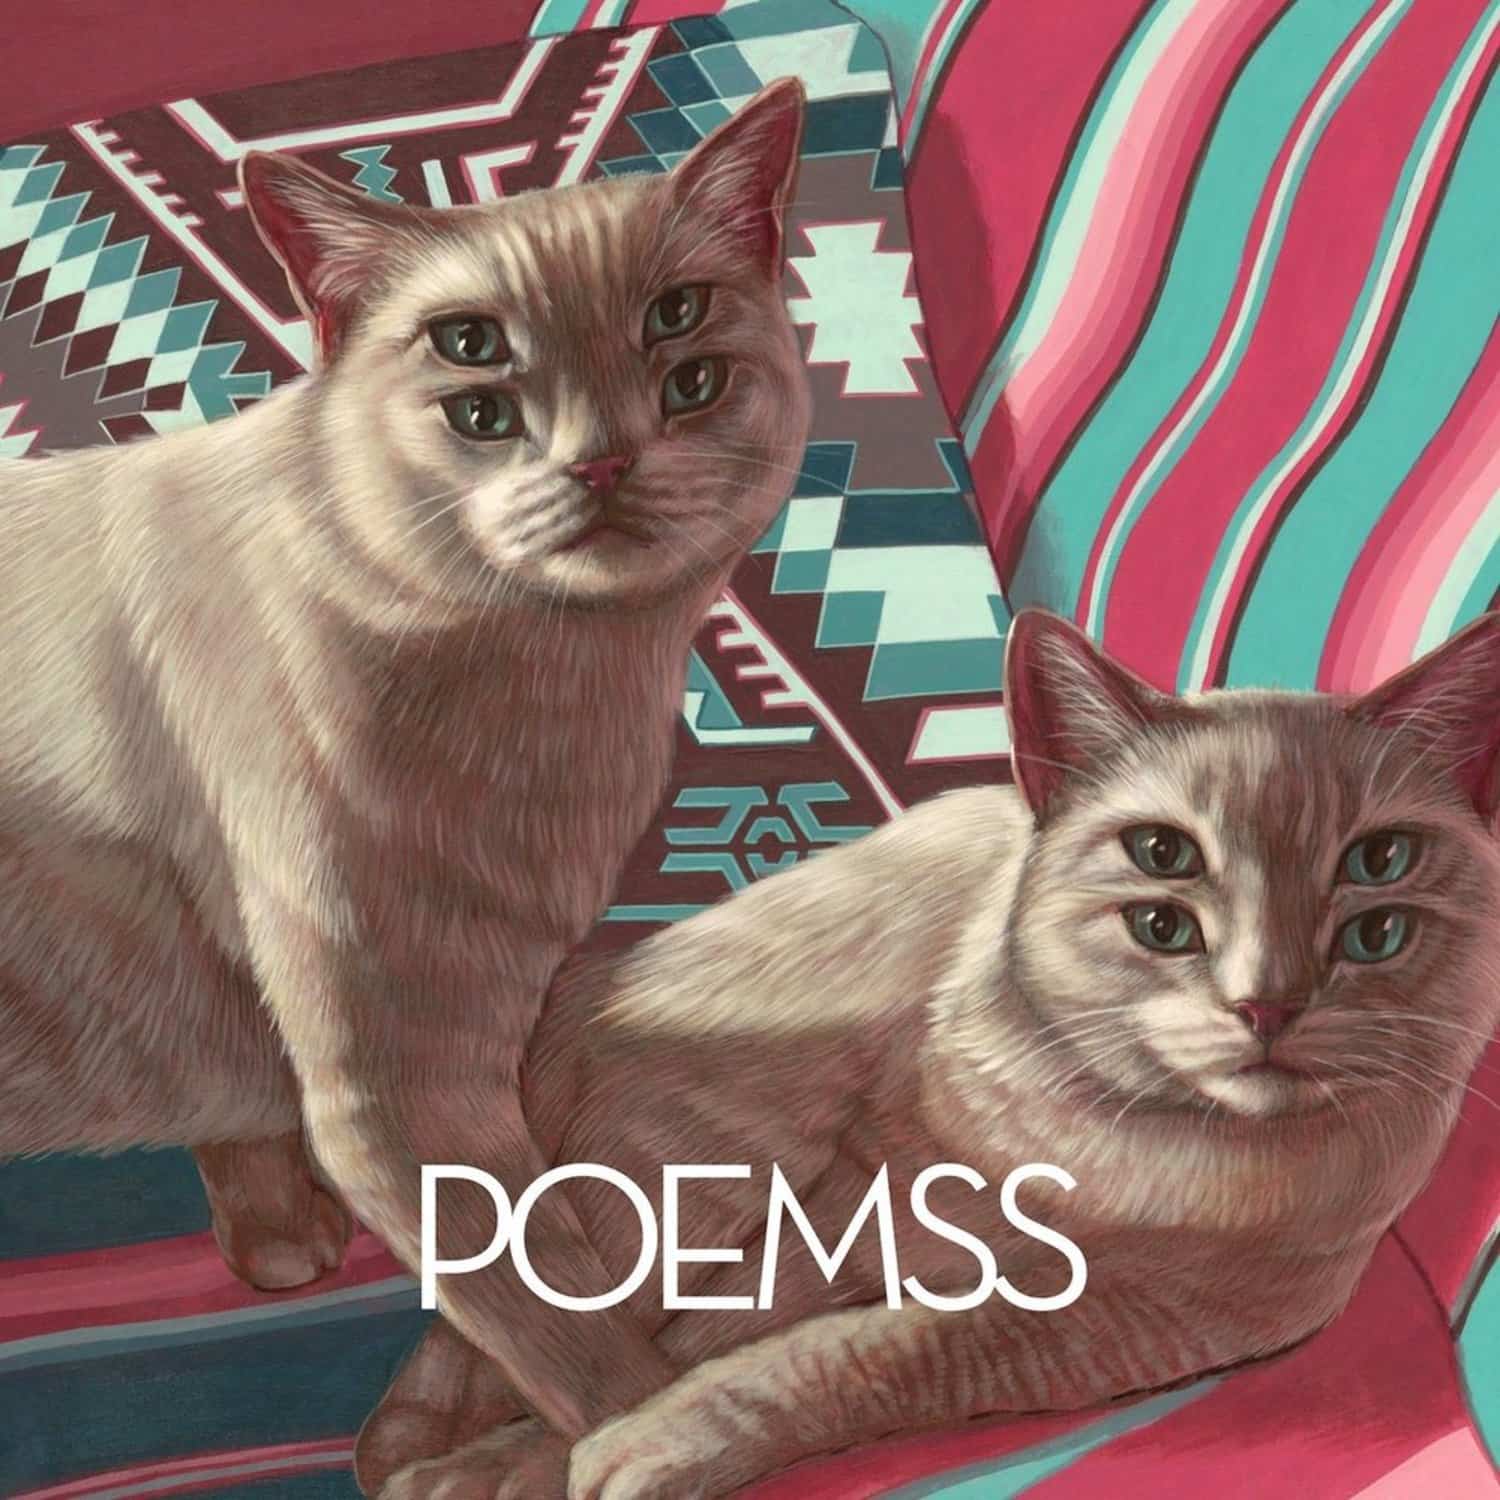 Poemss - POEMMS 